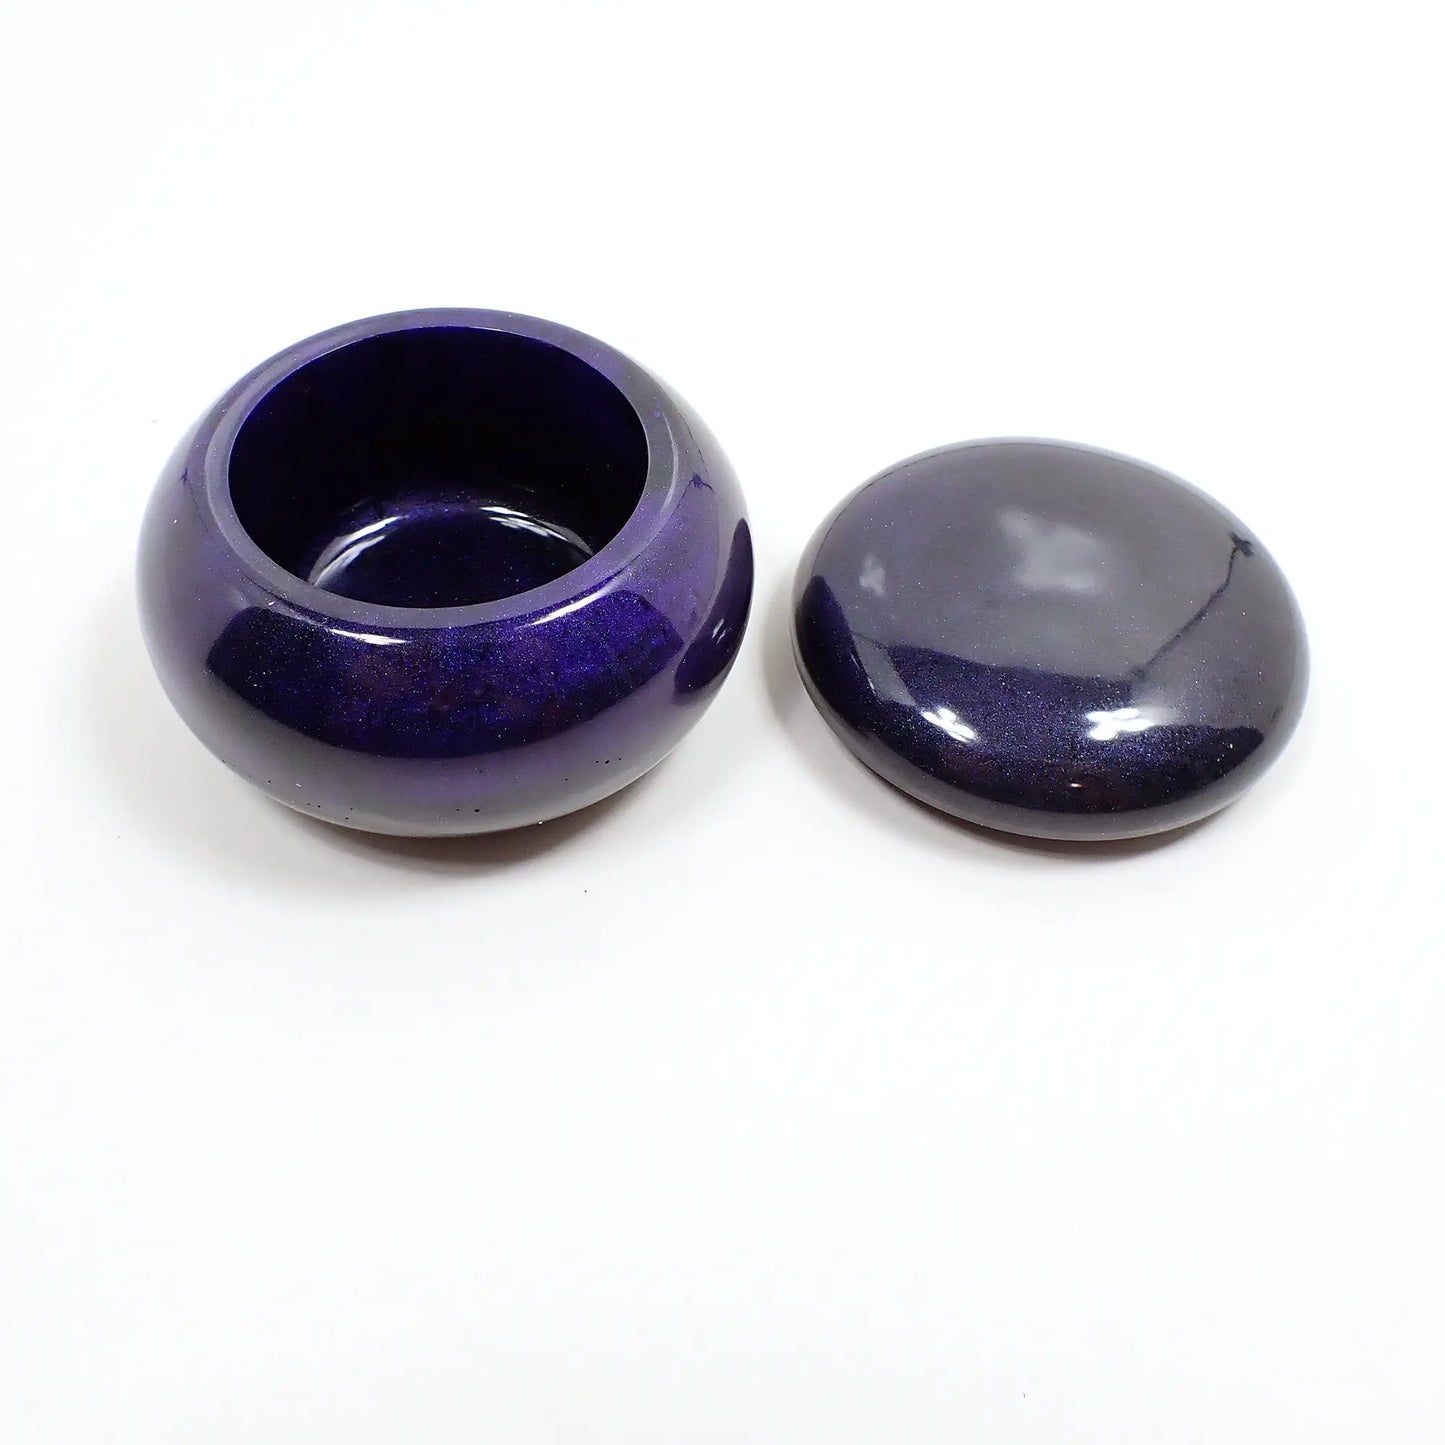 Goth Small Dark Pearly Purple Blue Resin Handmade Round Trinket Box